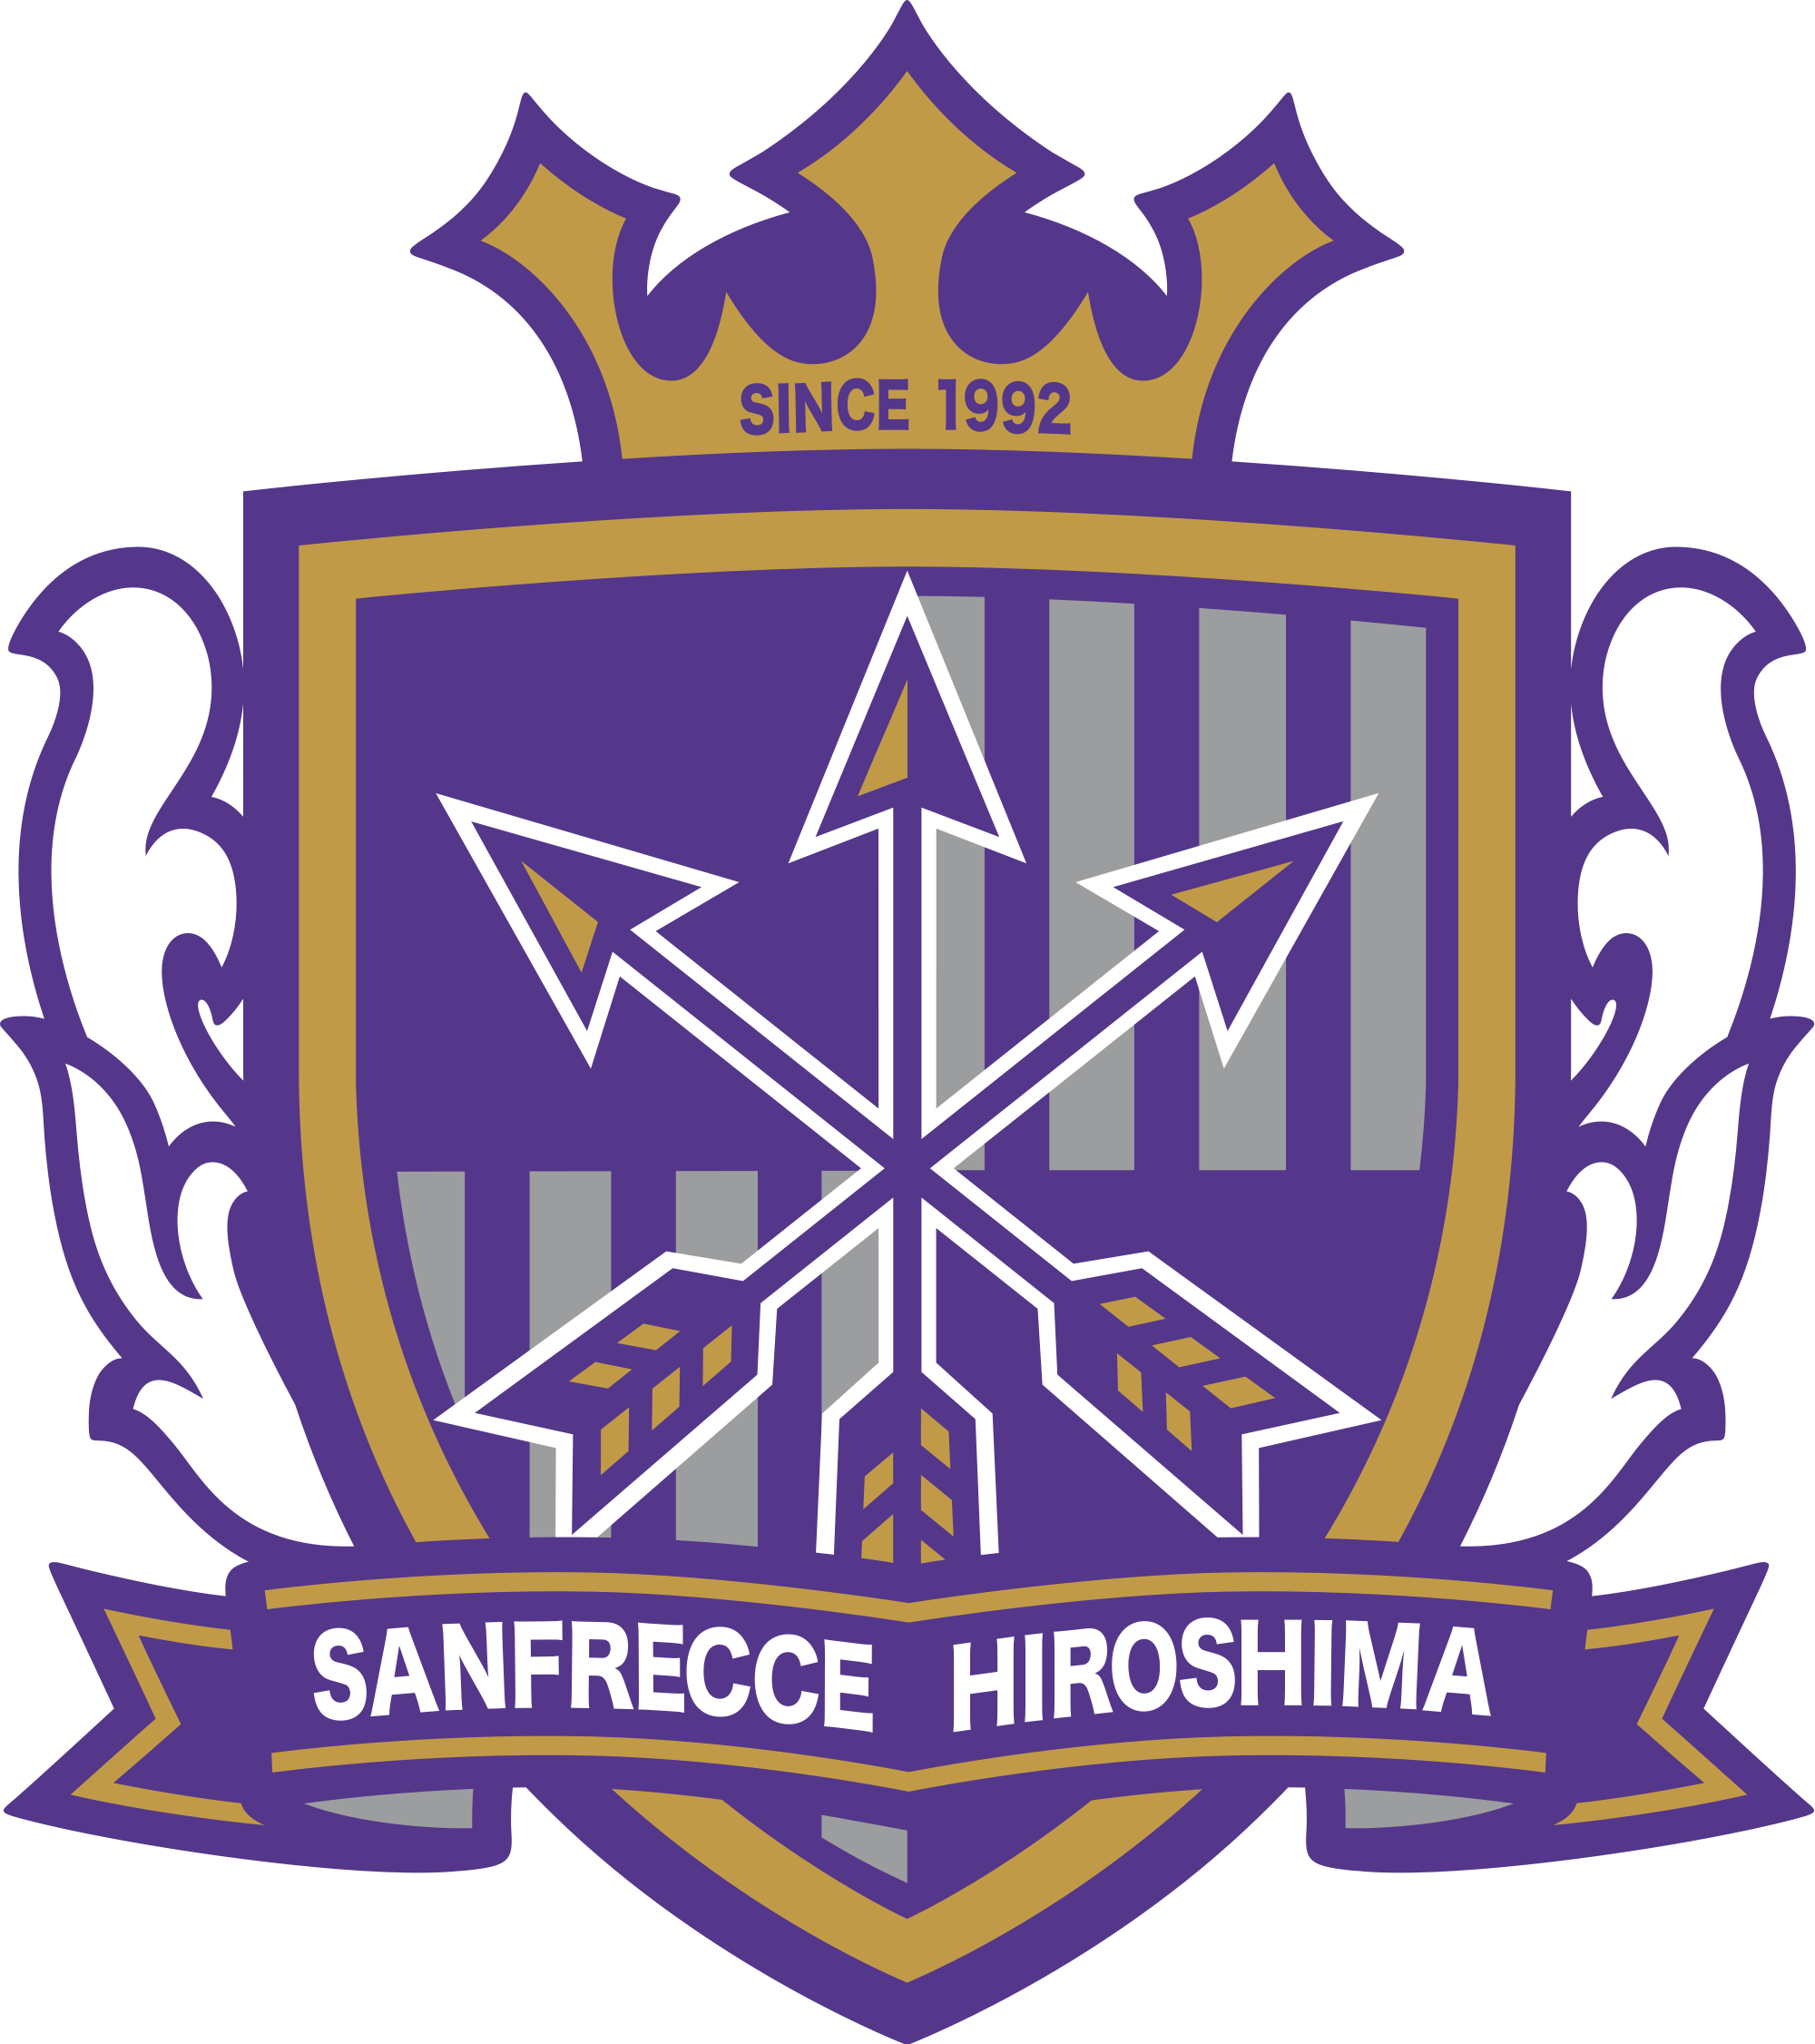 Sanfrecce Hiroshima. Logos. Sanfrecce